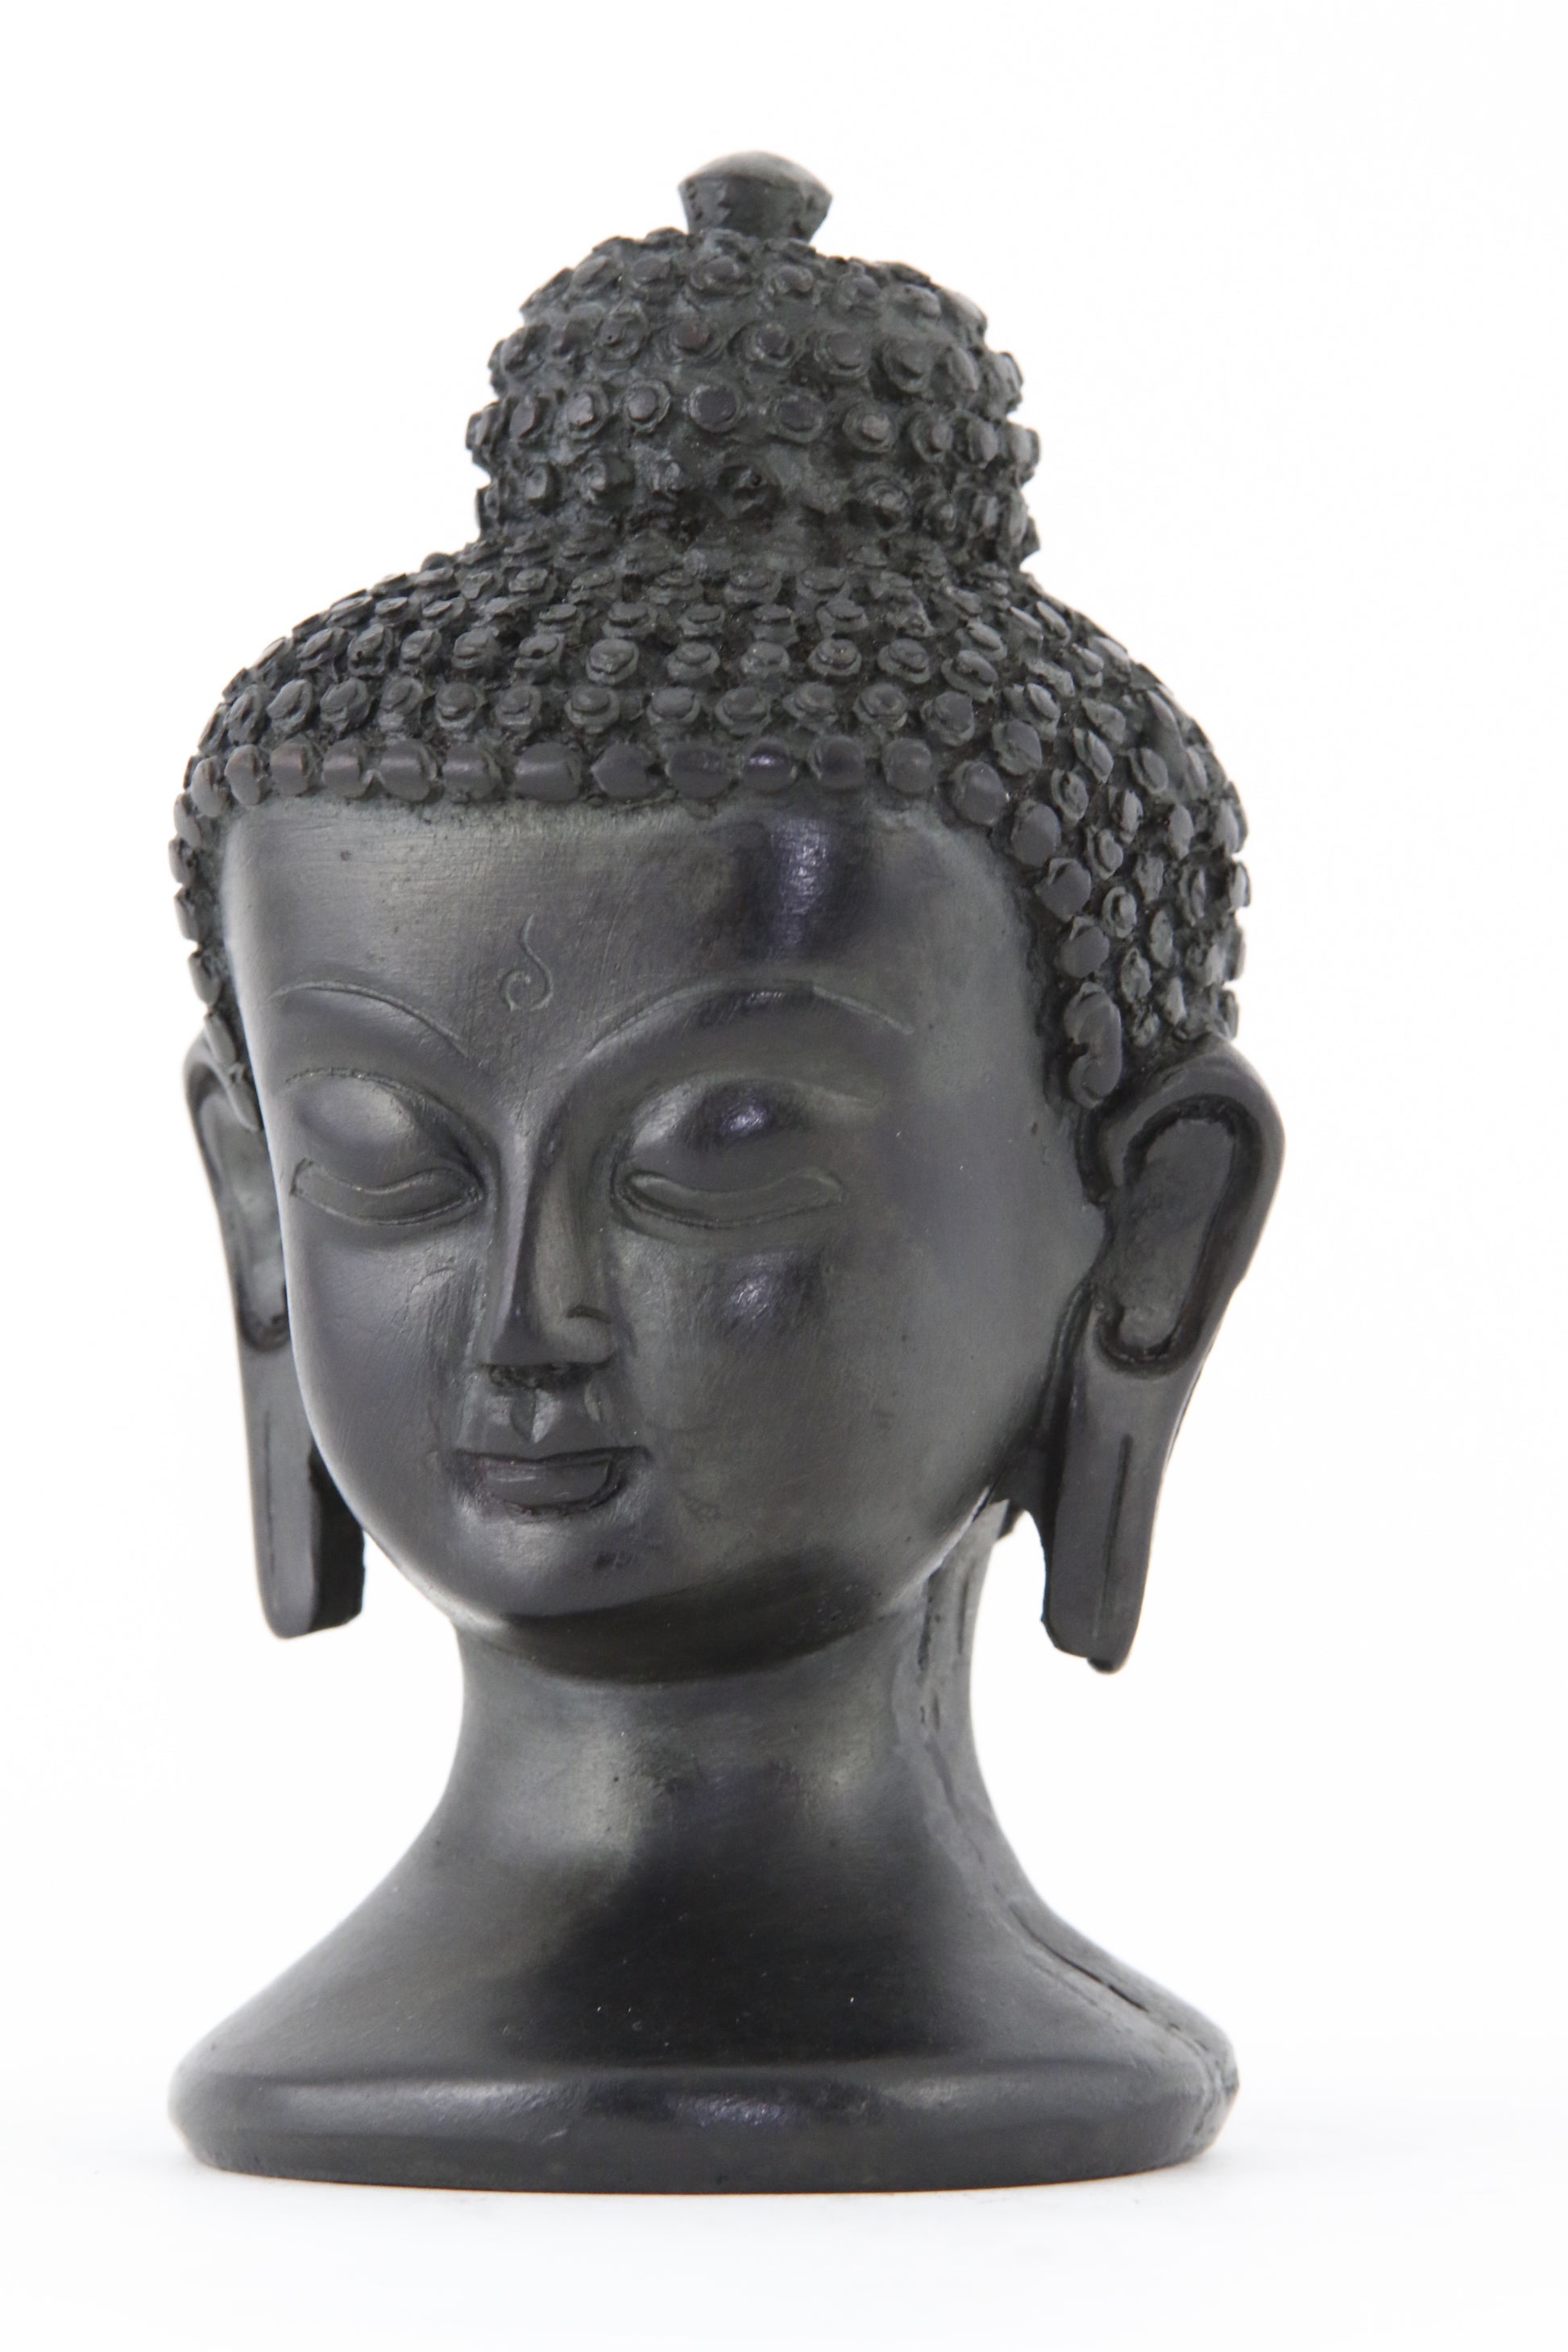 BUDDHA HEAD STATUE DARK SMALL SIDE VIEW